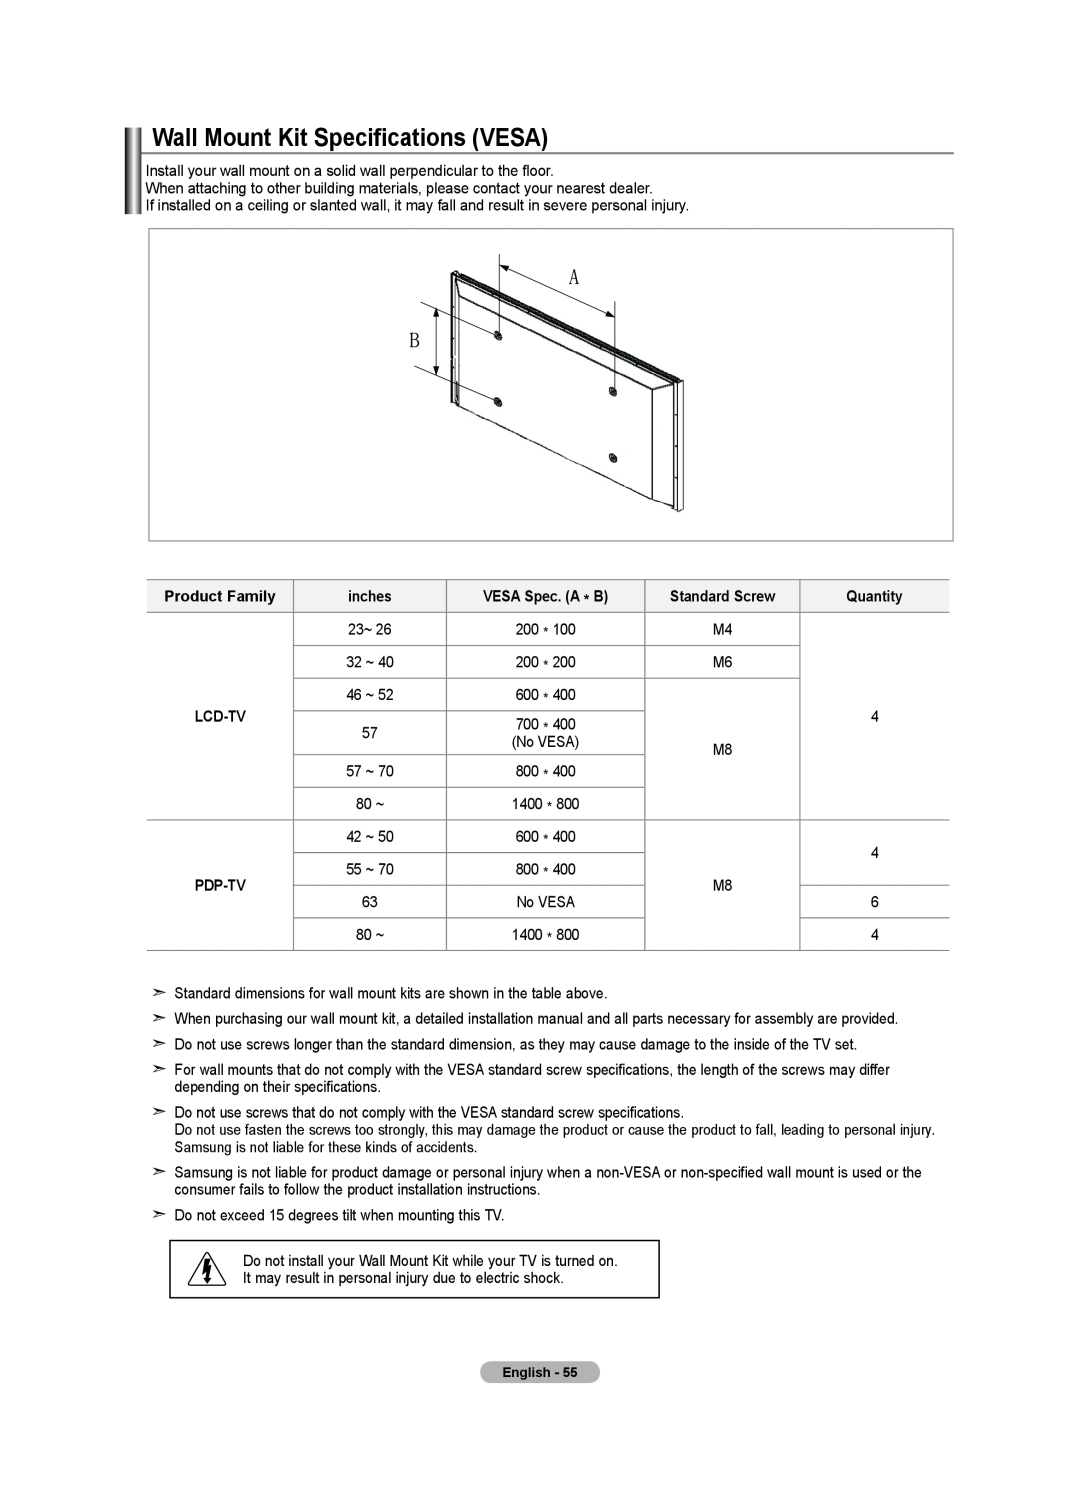 Samsung LN22A330 Wall Mount Kit Specifications VESA, Product Family, inches, VESA Spec. A * B, Standard Screw, Quantity 